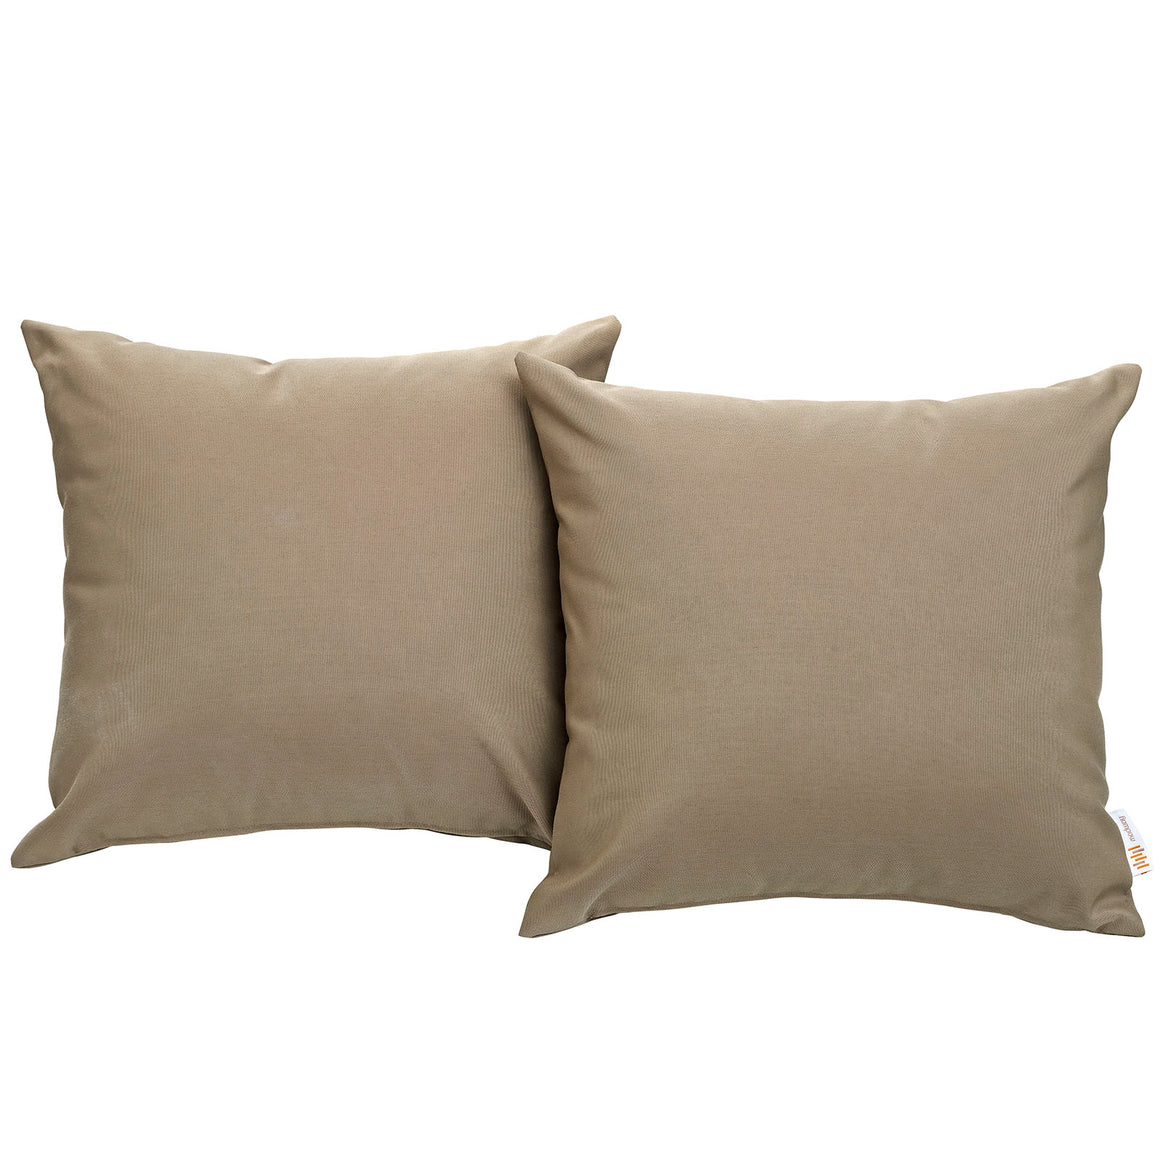 Convene Two Piece Outdoor Patio Pillow Set